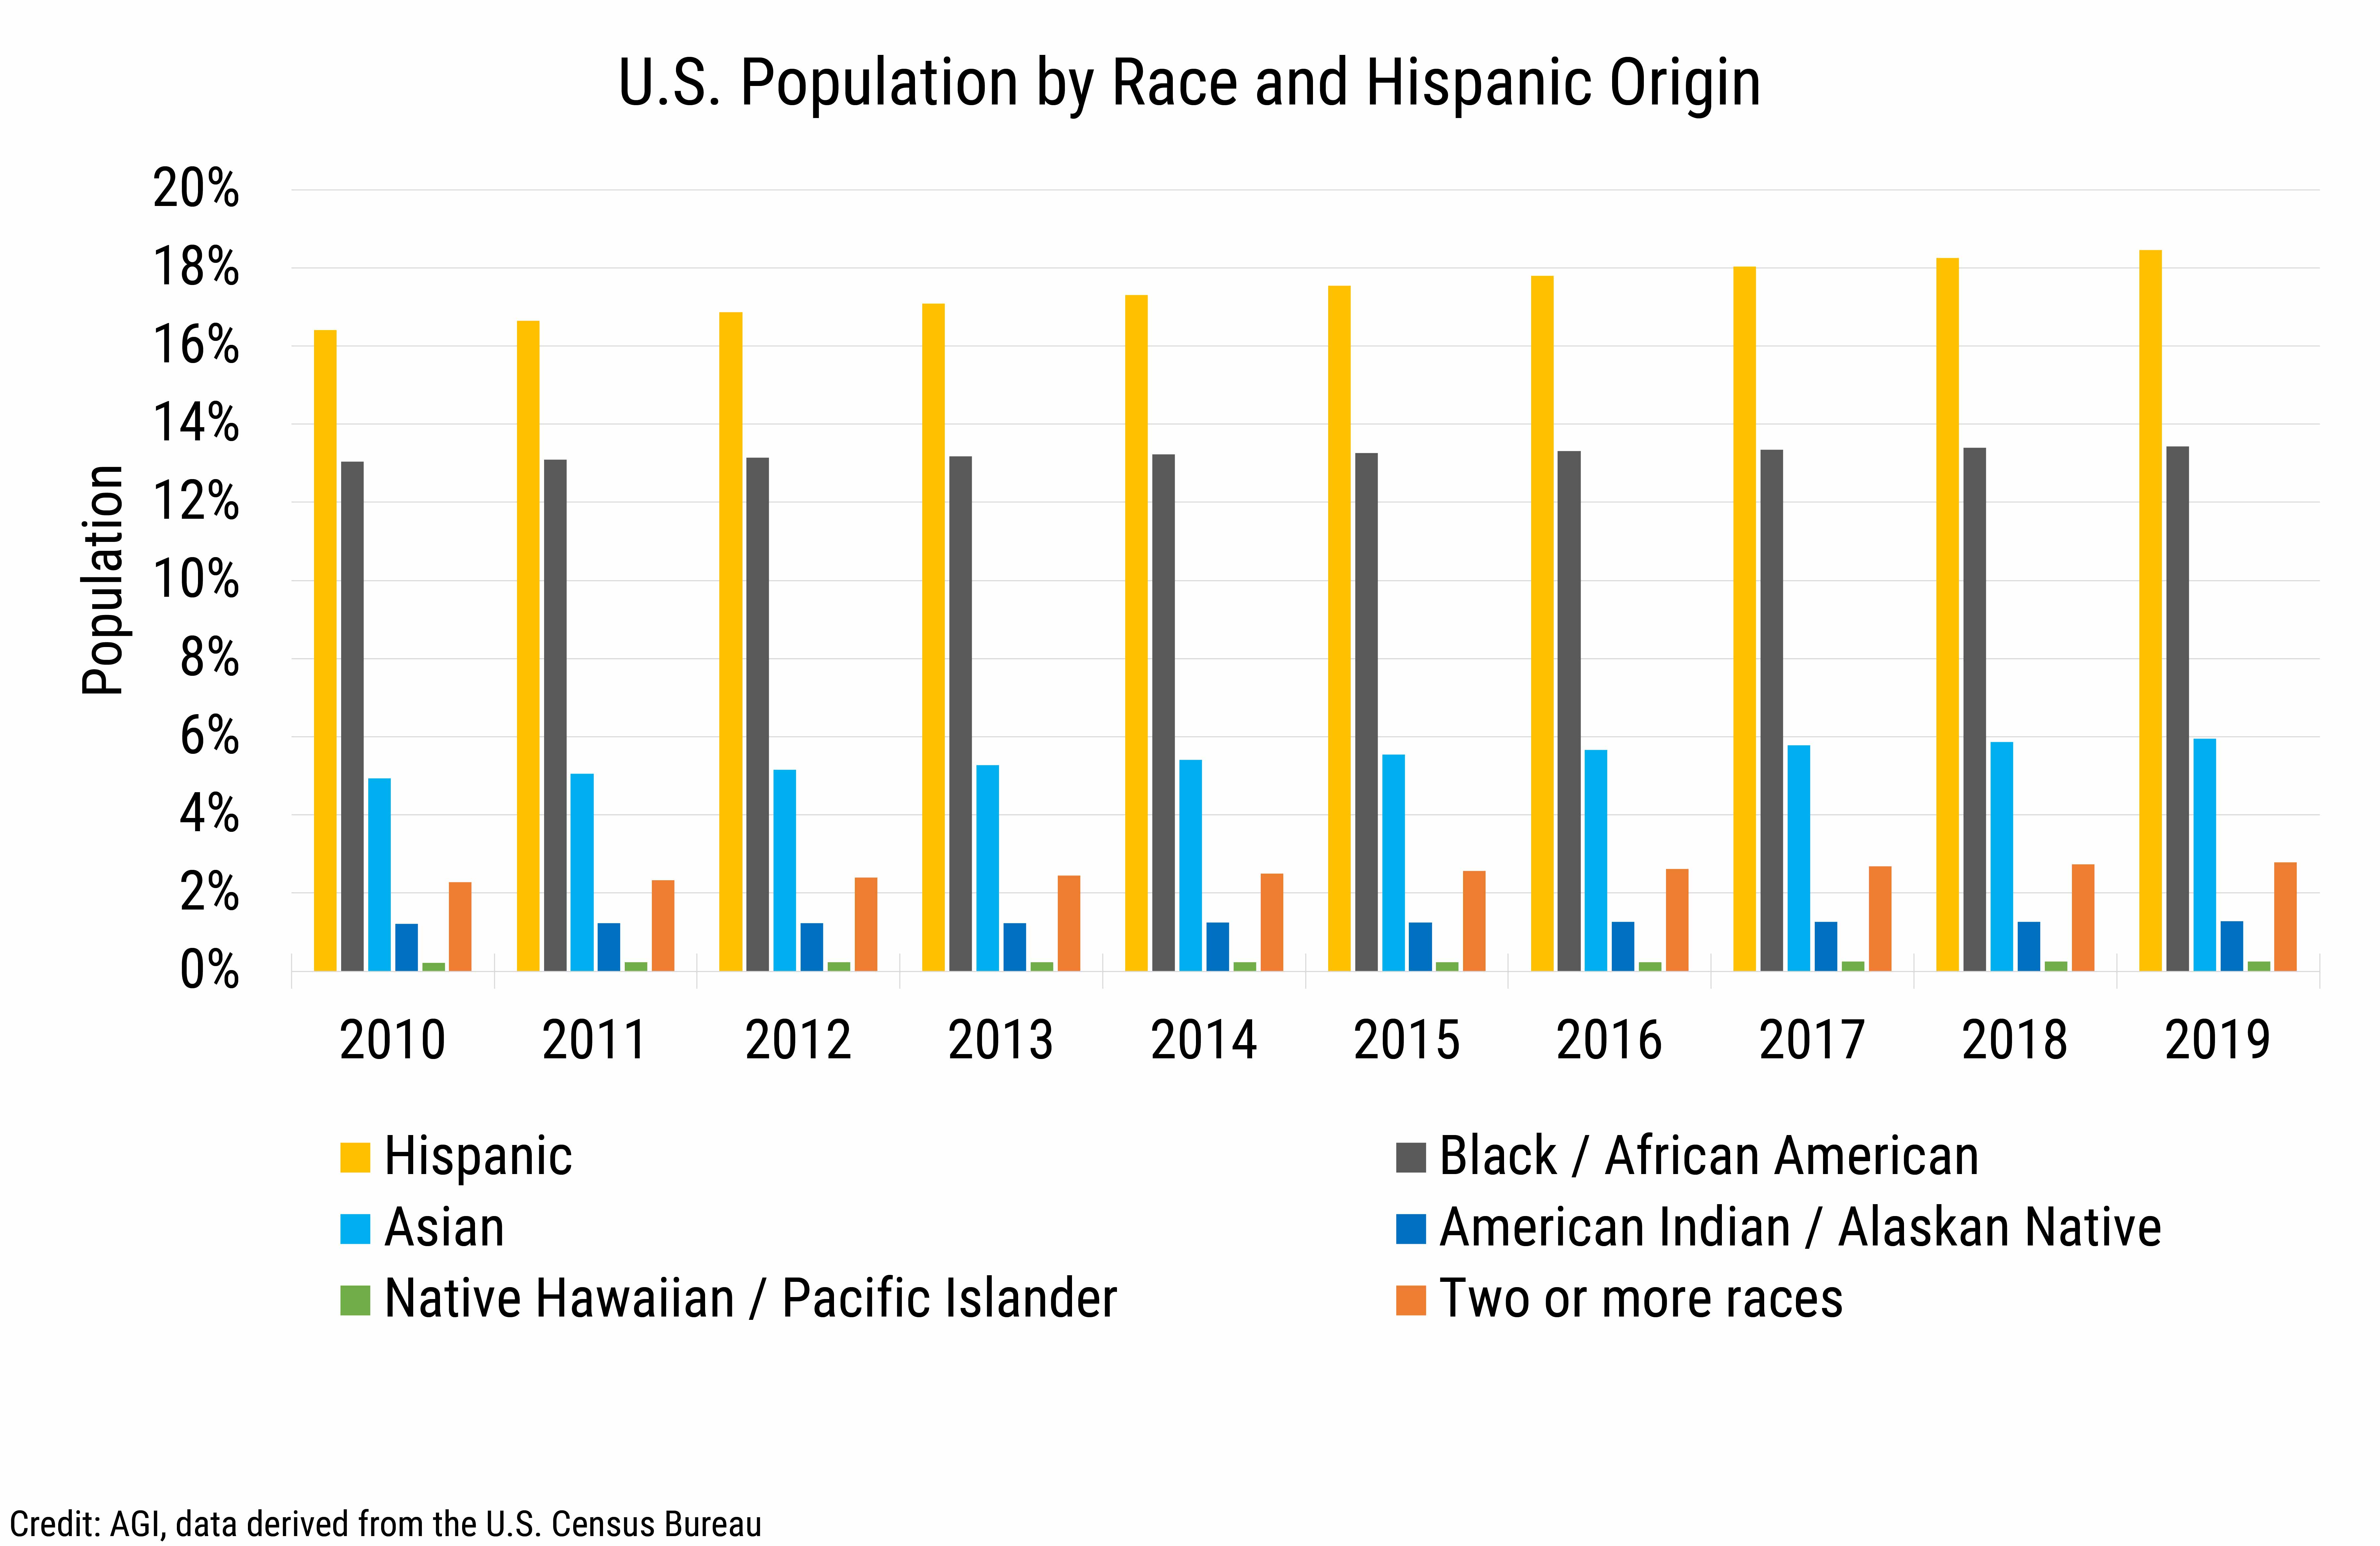 DB2020-023 chart01-US Population by Race and Hispanic Origin (Credit: AGI, data derived from the U.S. Census Bureau)